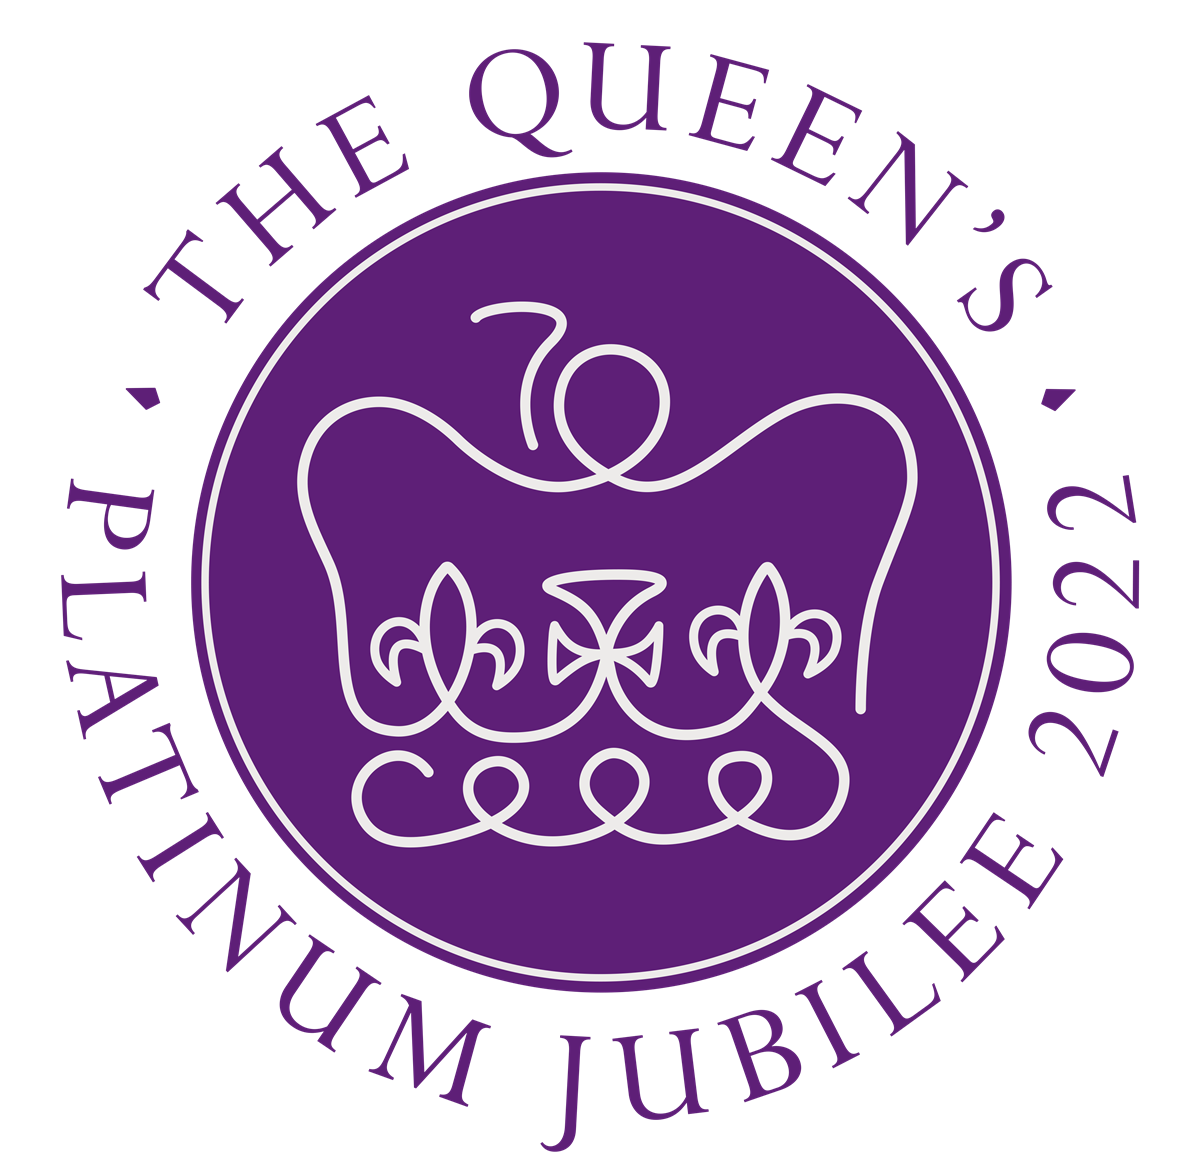 queens platinum jubilee english 0-2